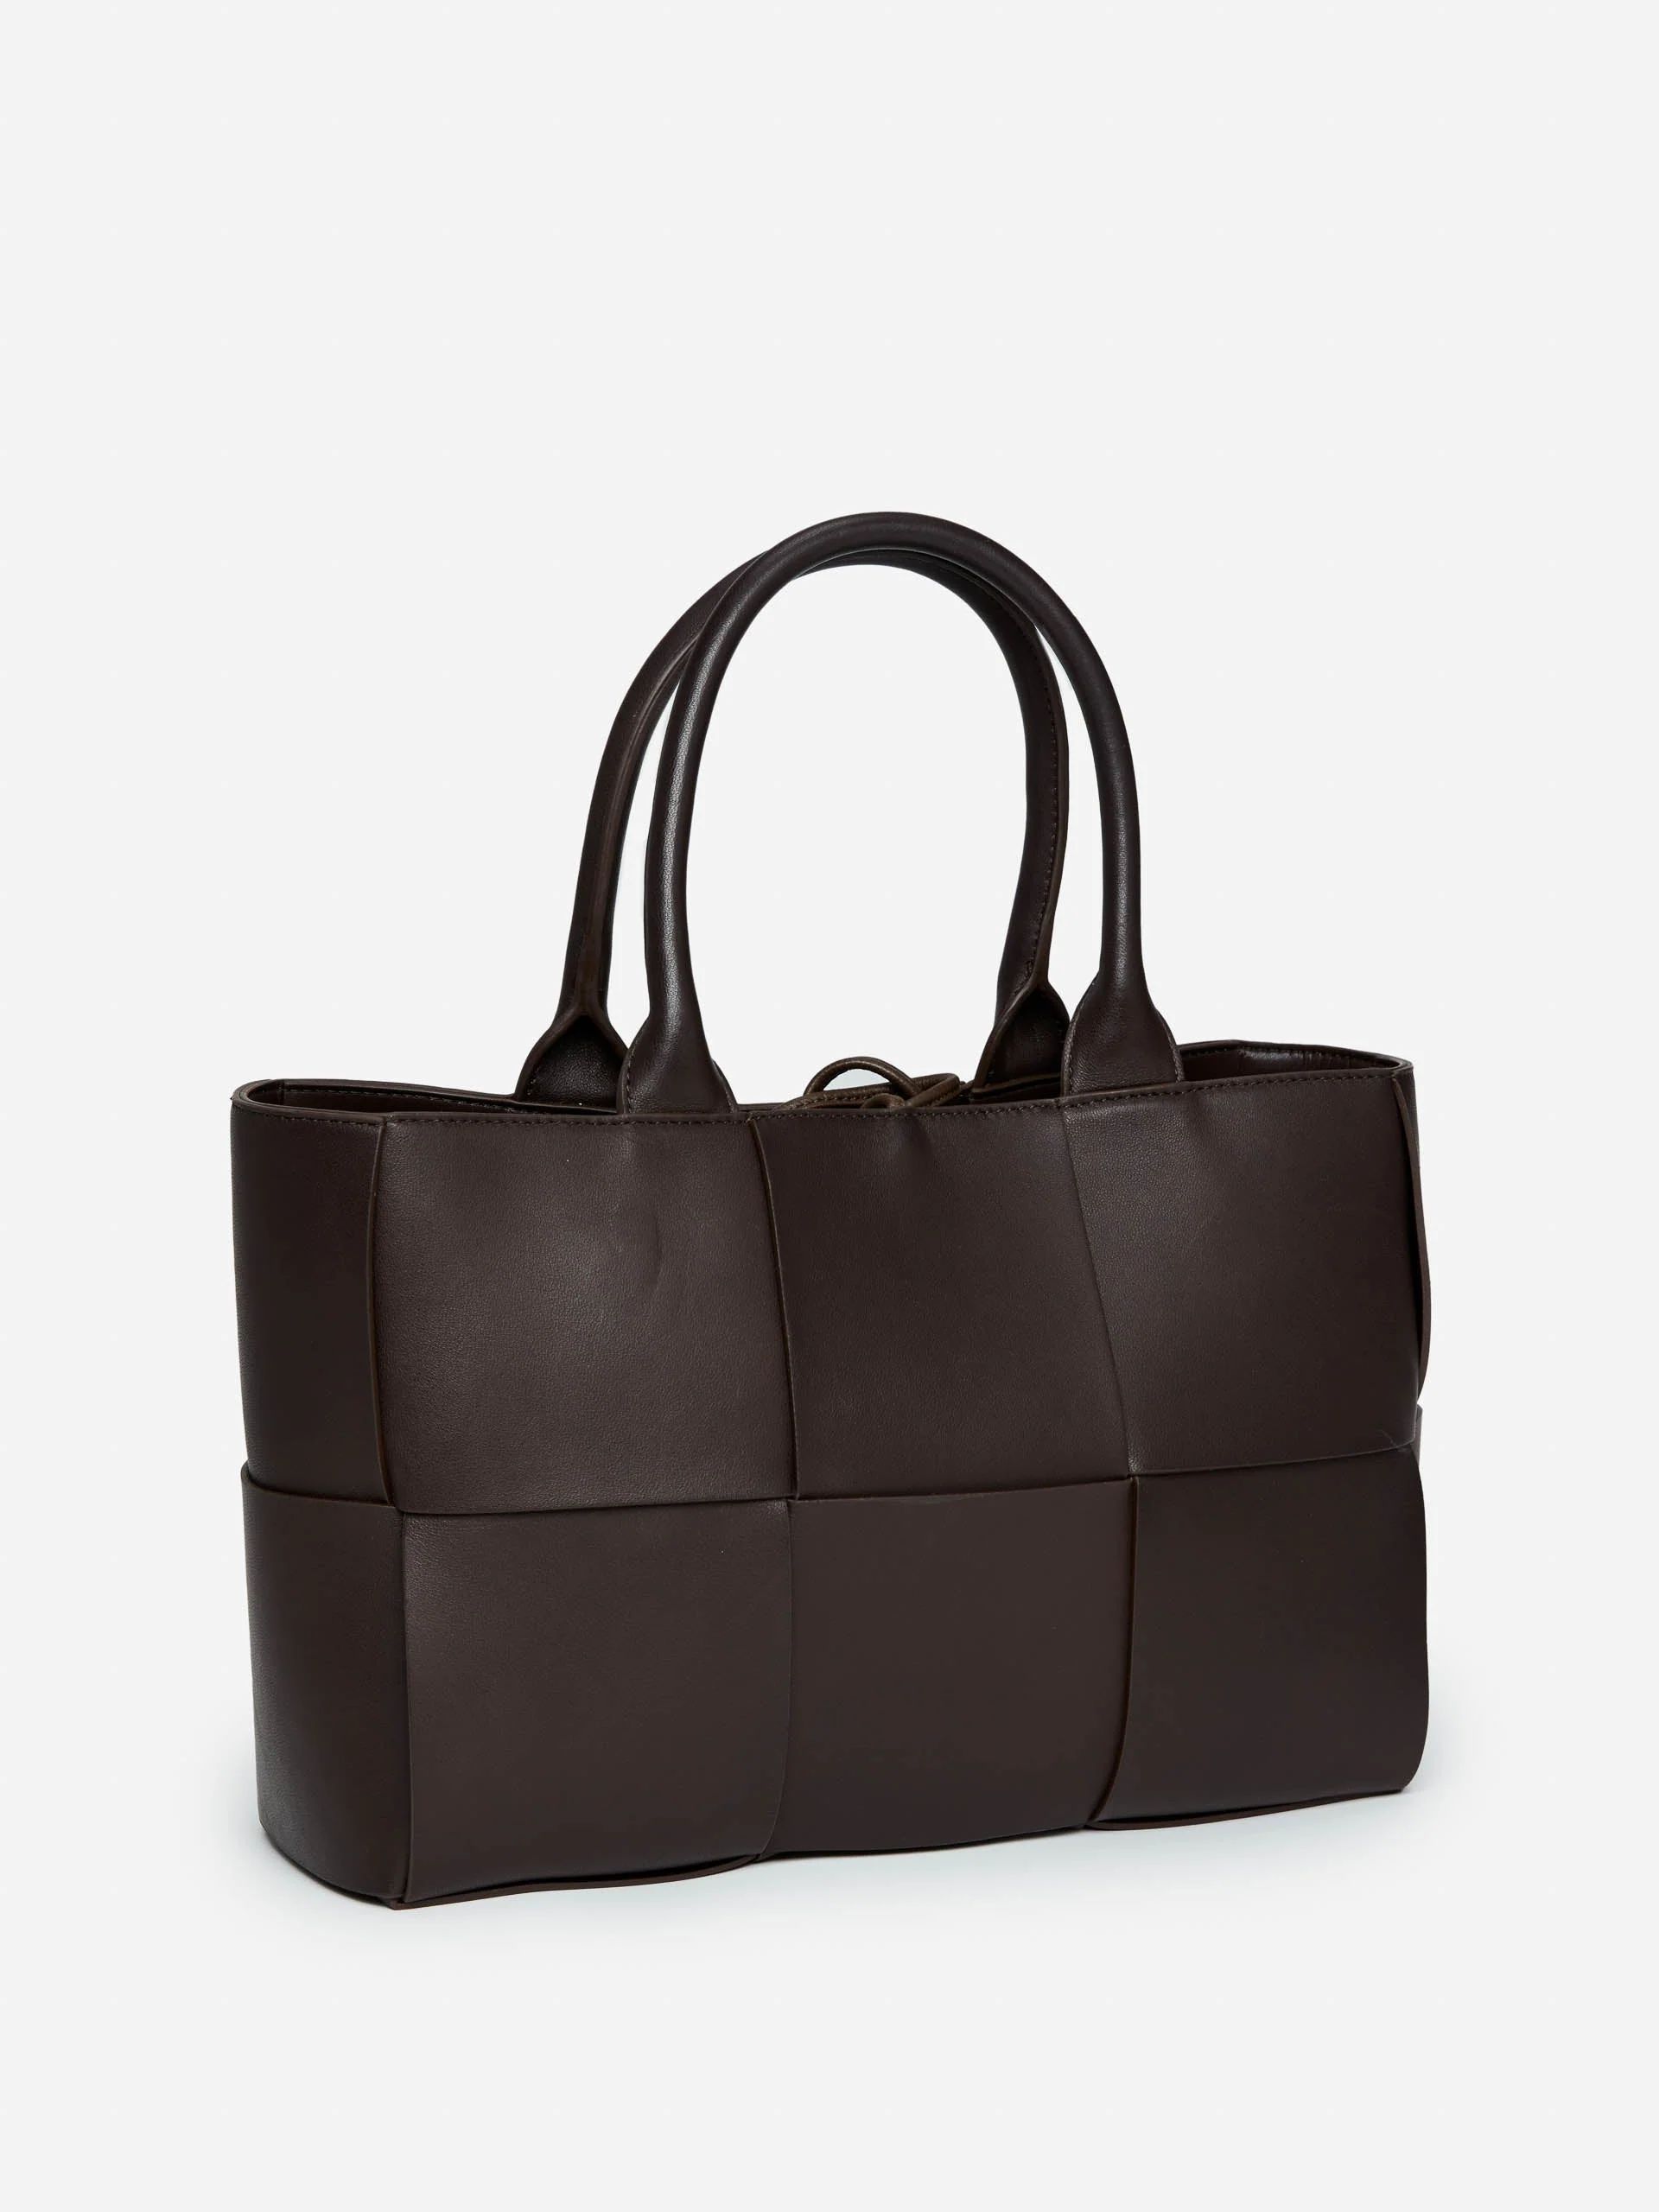 Tessare Woven Leather Handbag | J.McLaughlin